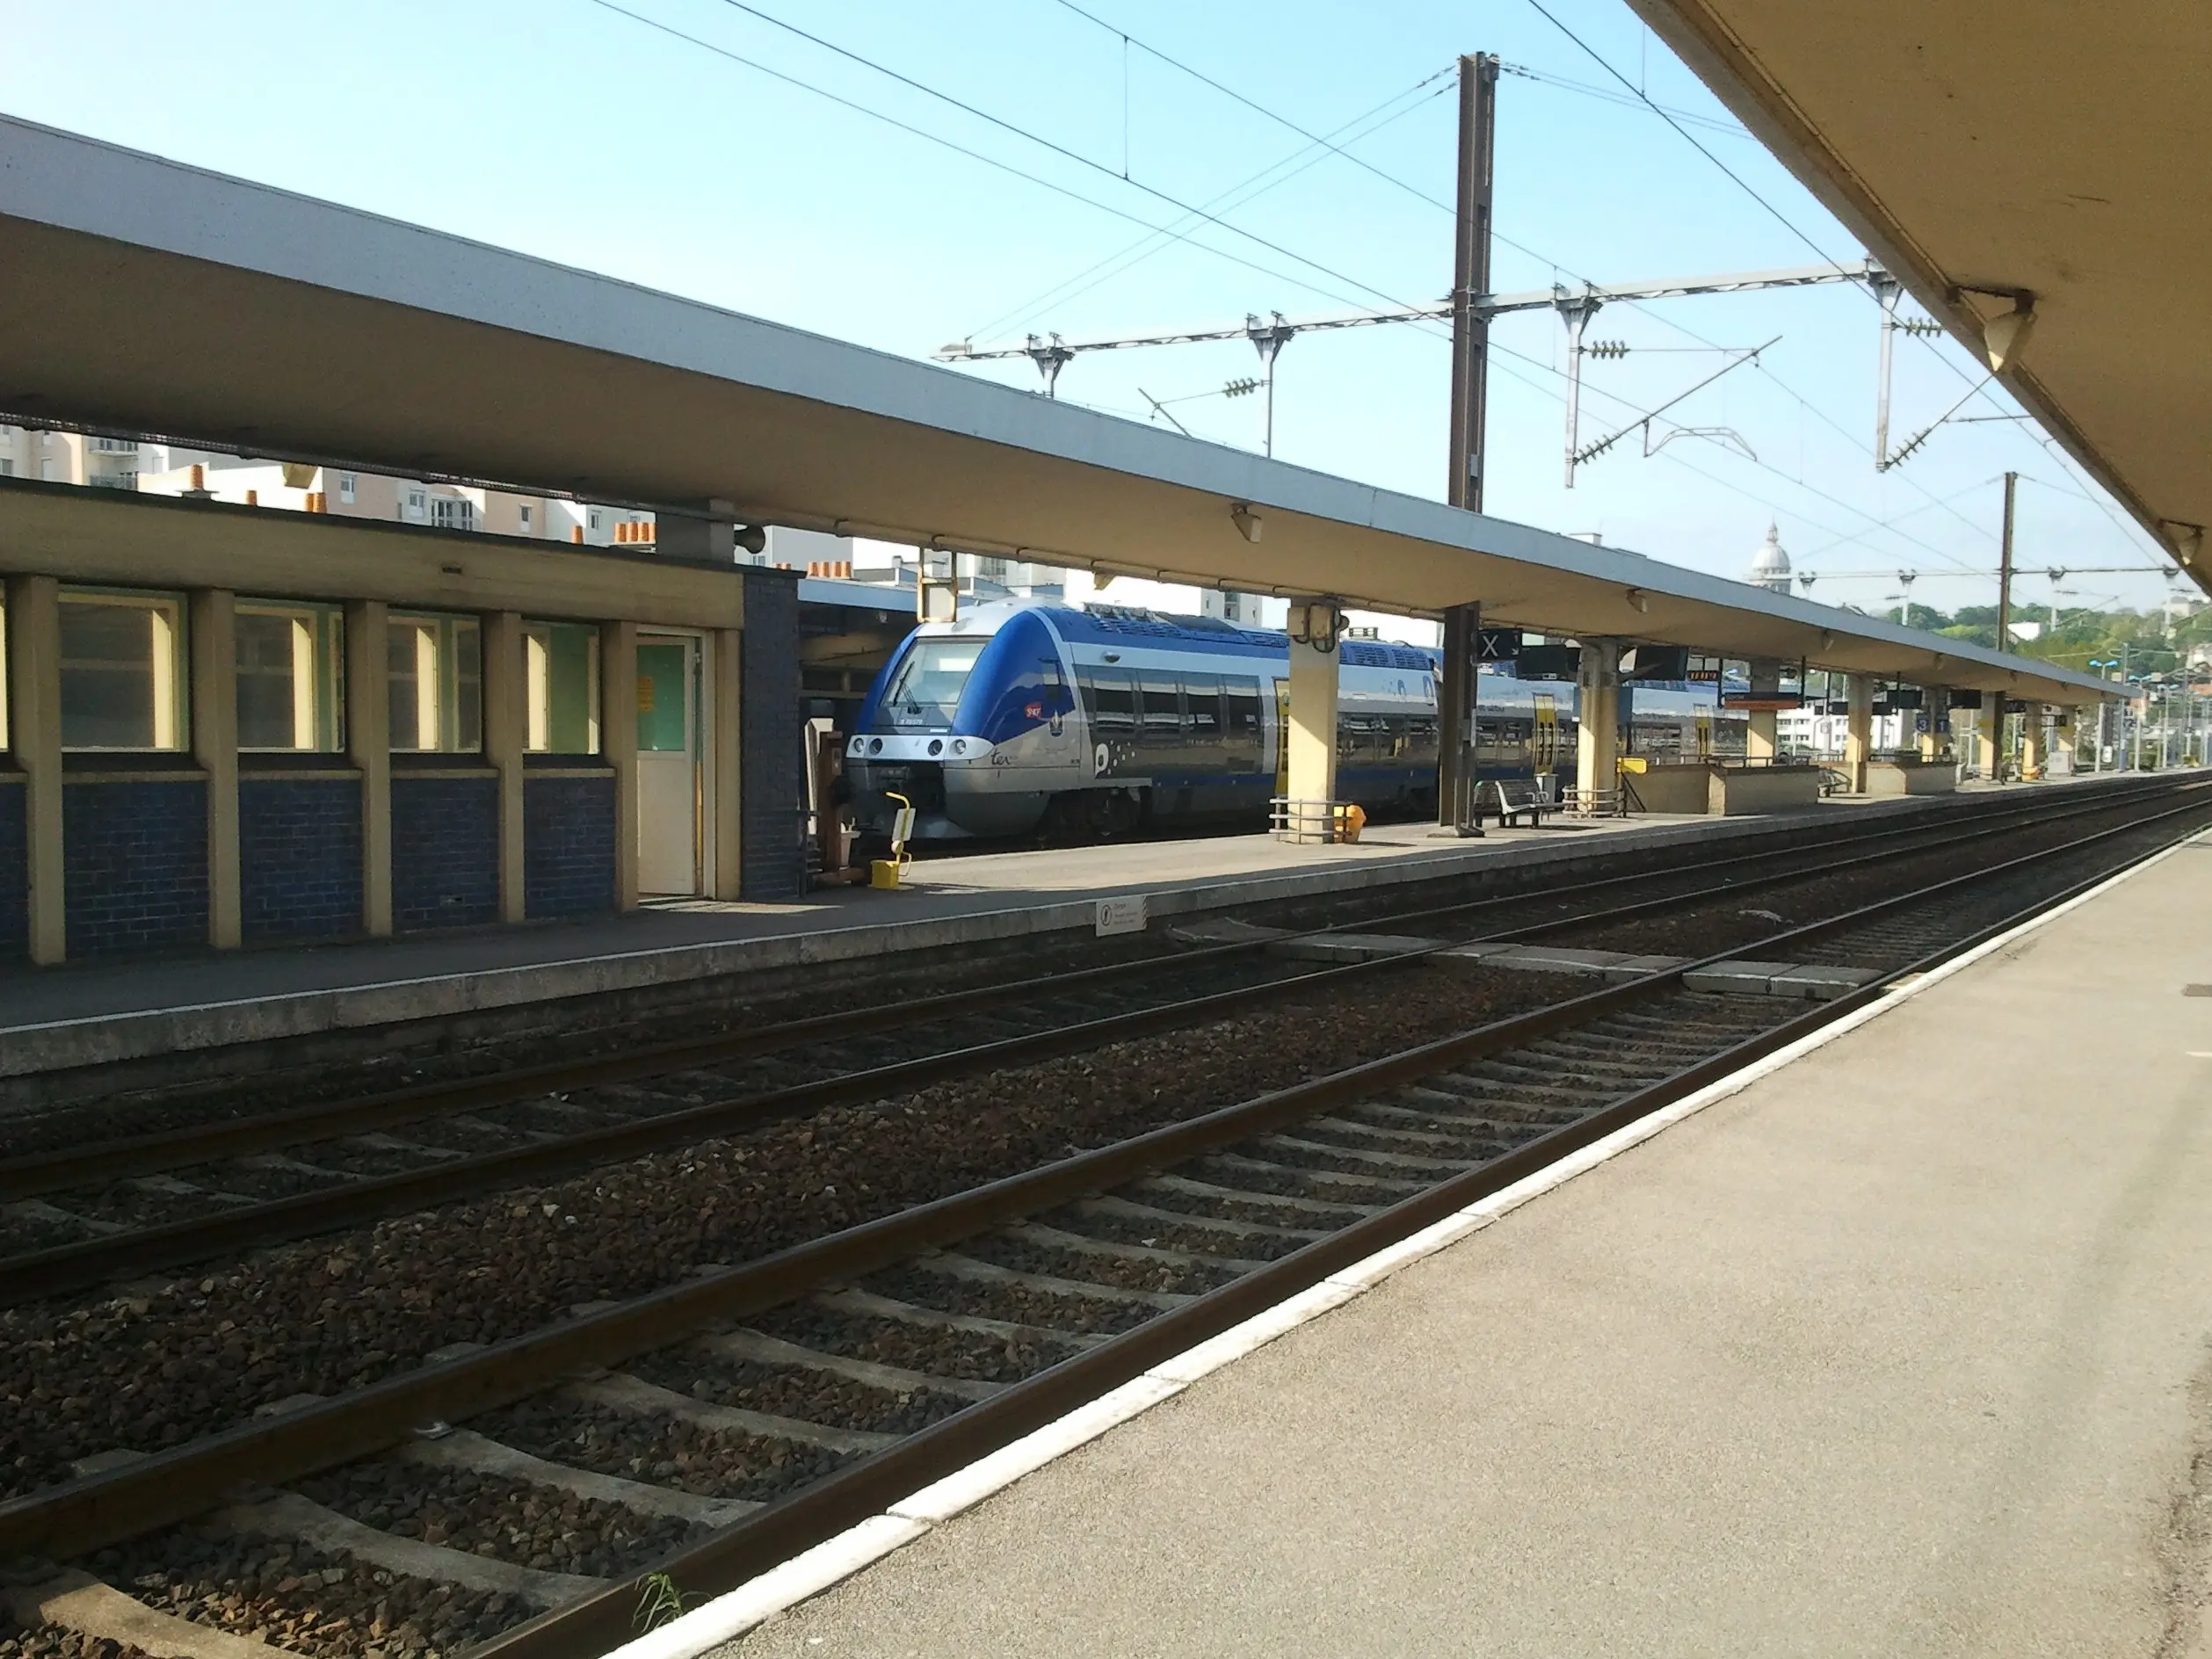 boulogne ferrocarril - Cuál es el tren que pasa por Boulogne